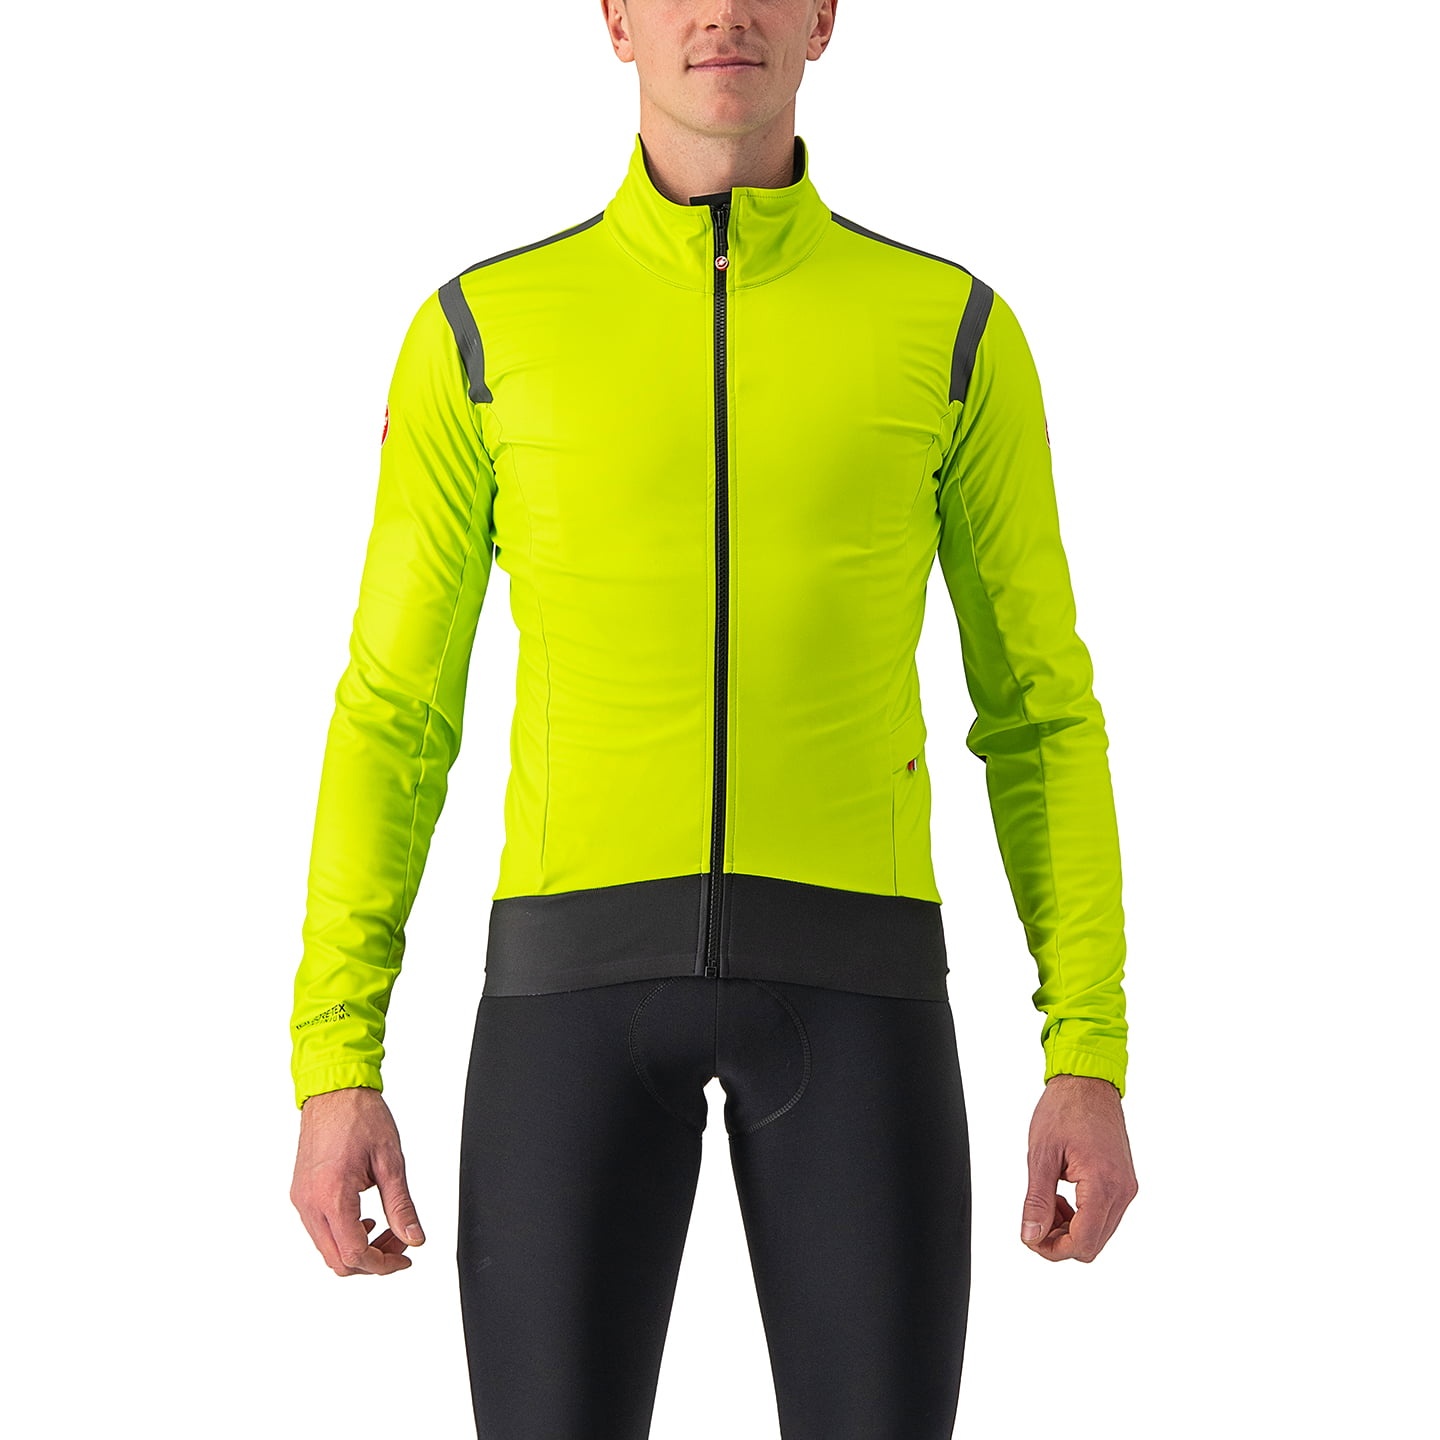 CASTELLI Alpha RoS 2 Light Jacket Light Jacket, for men, size S, Cycle jacket, Bike gear